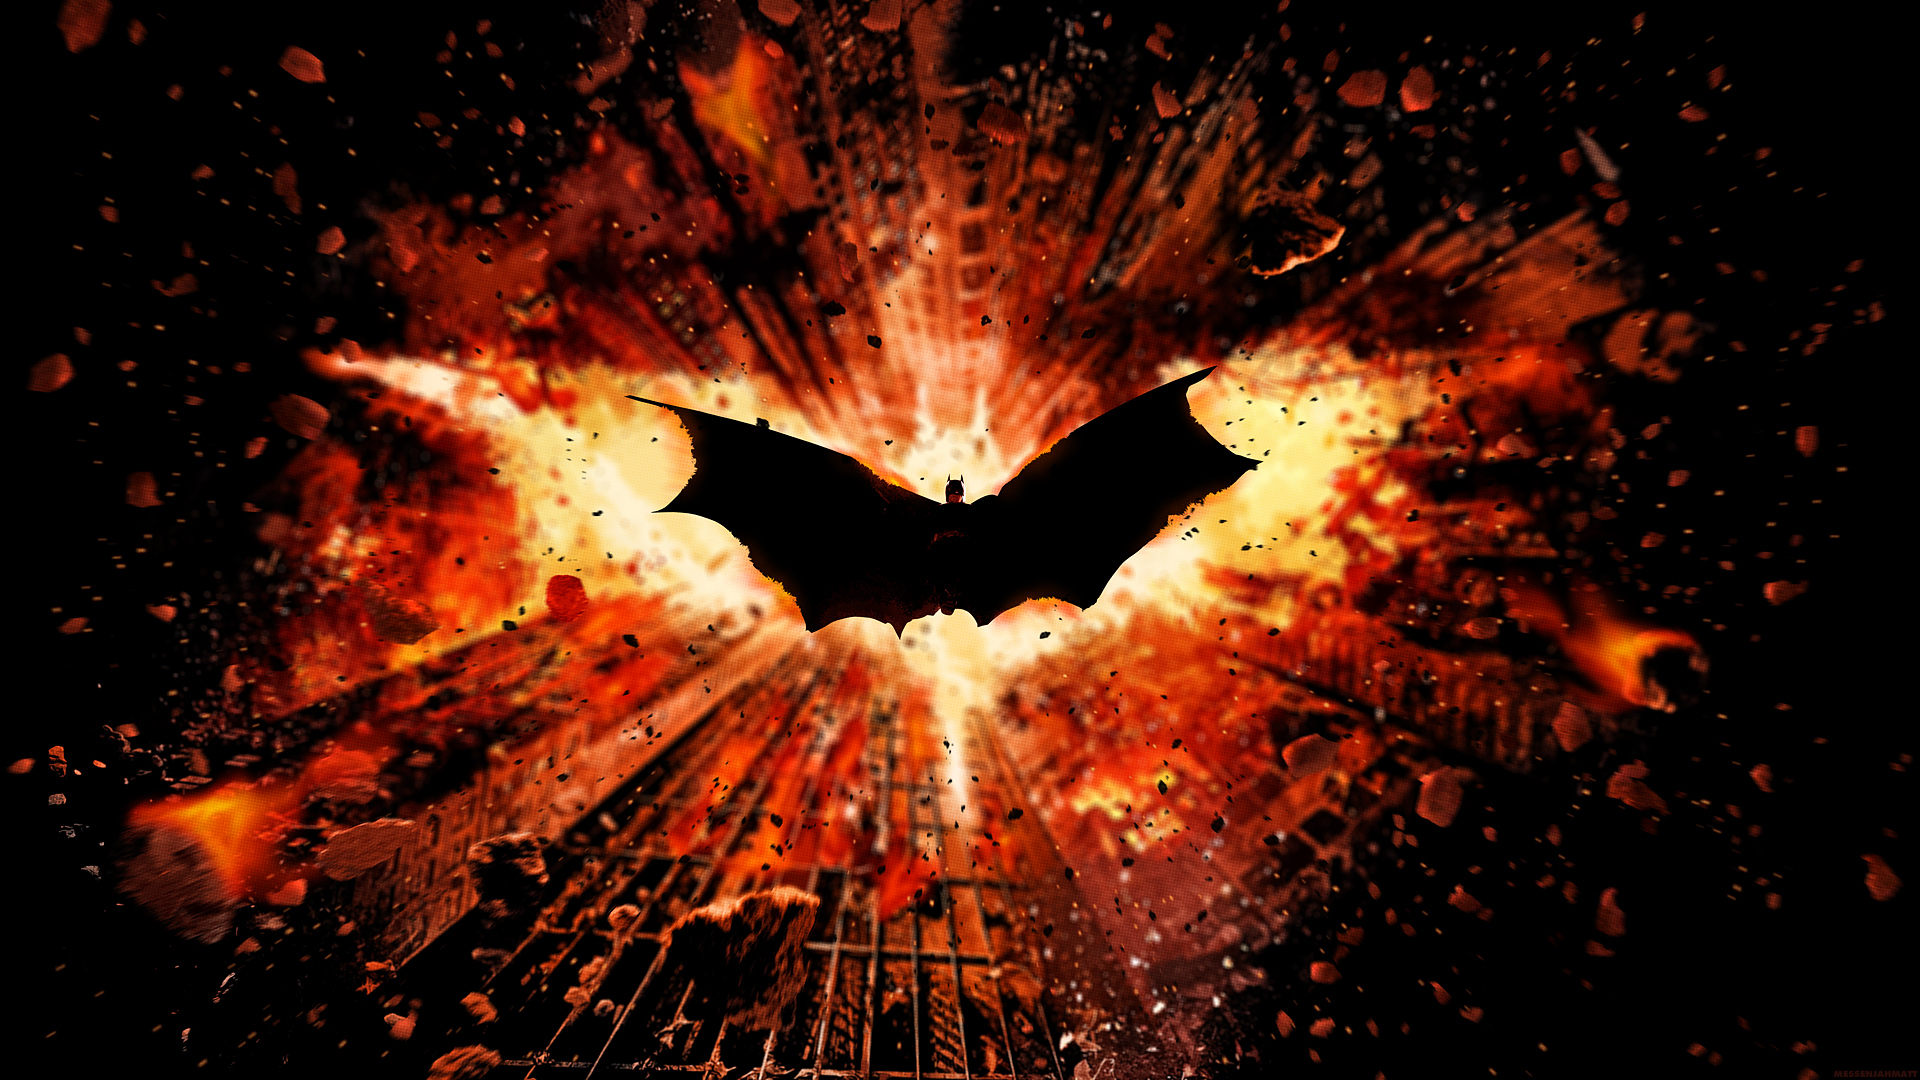 batman, the dark knight rises, movie images